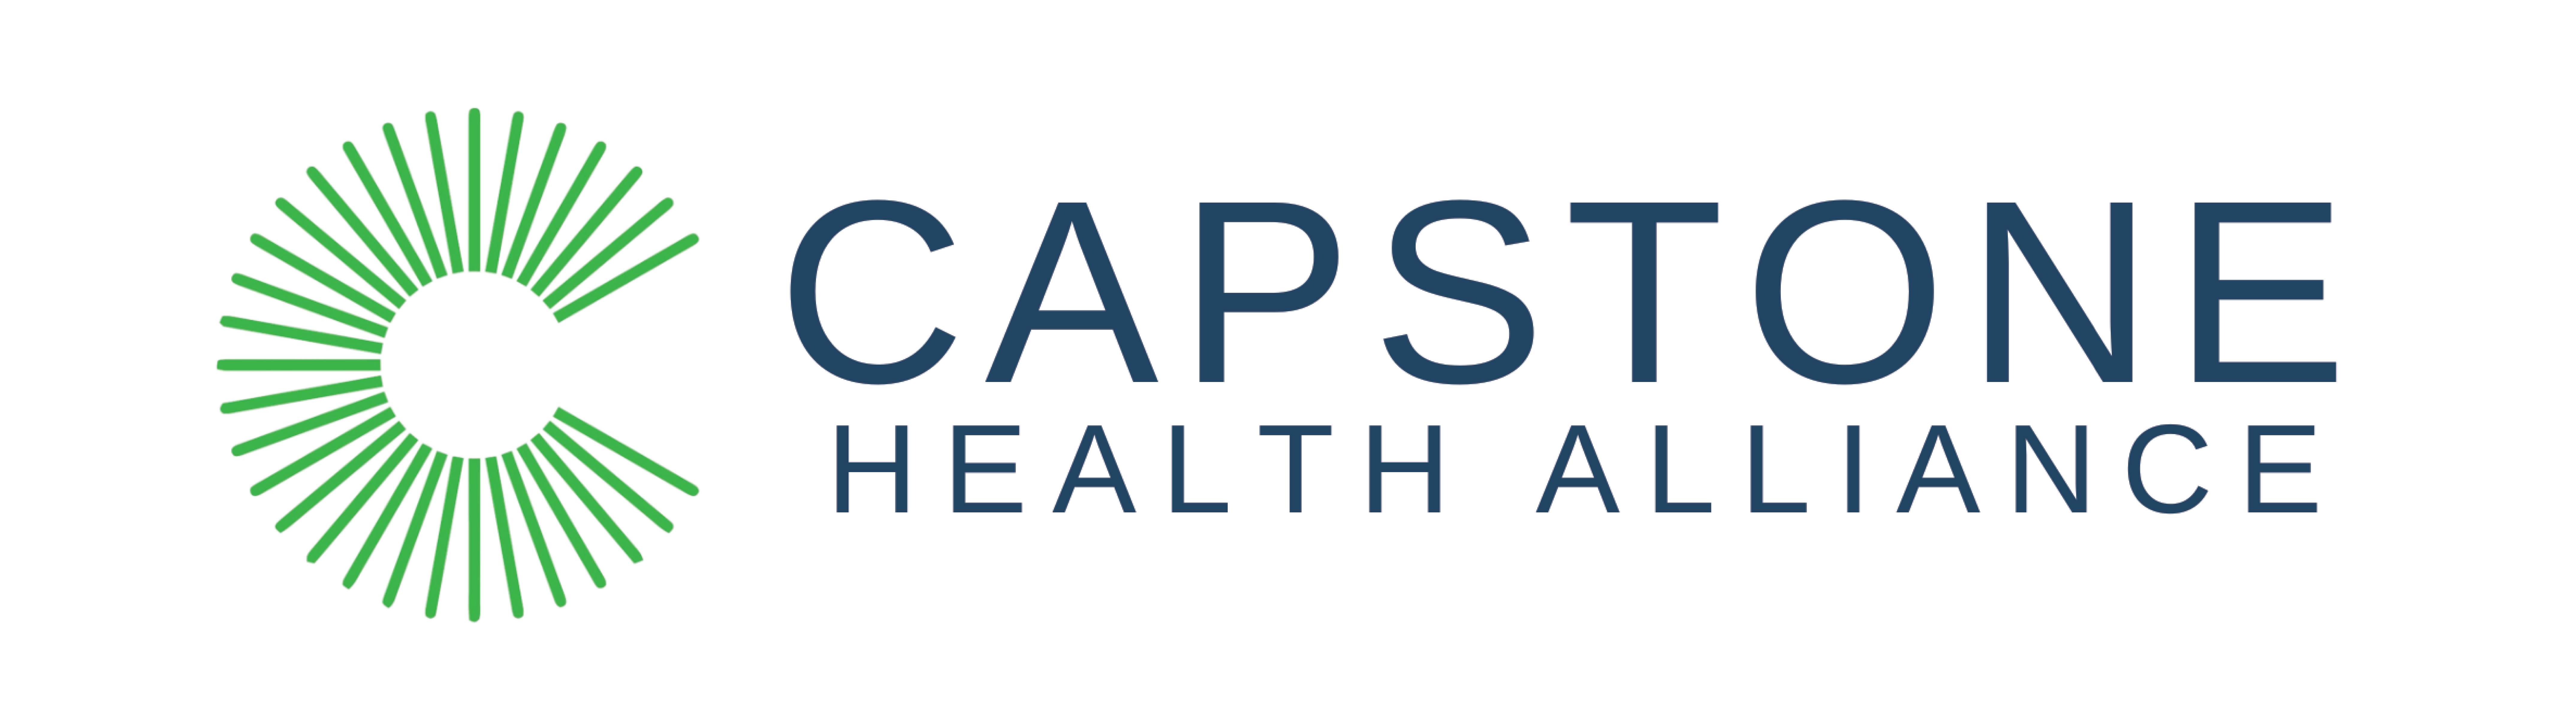 Capstone Health Alliance